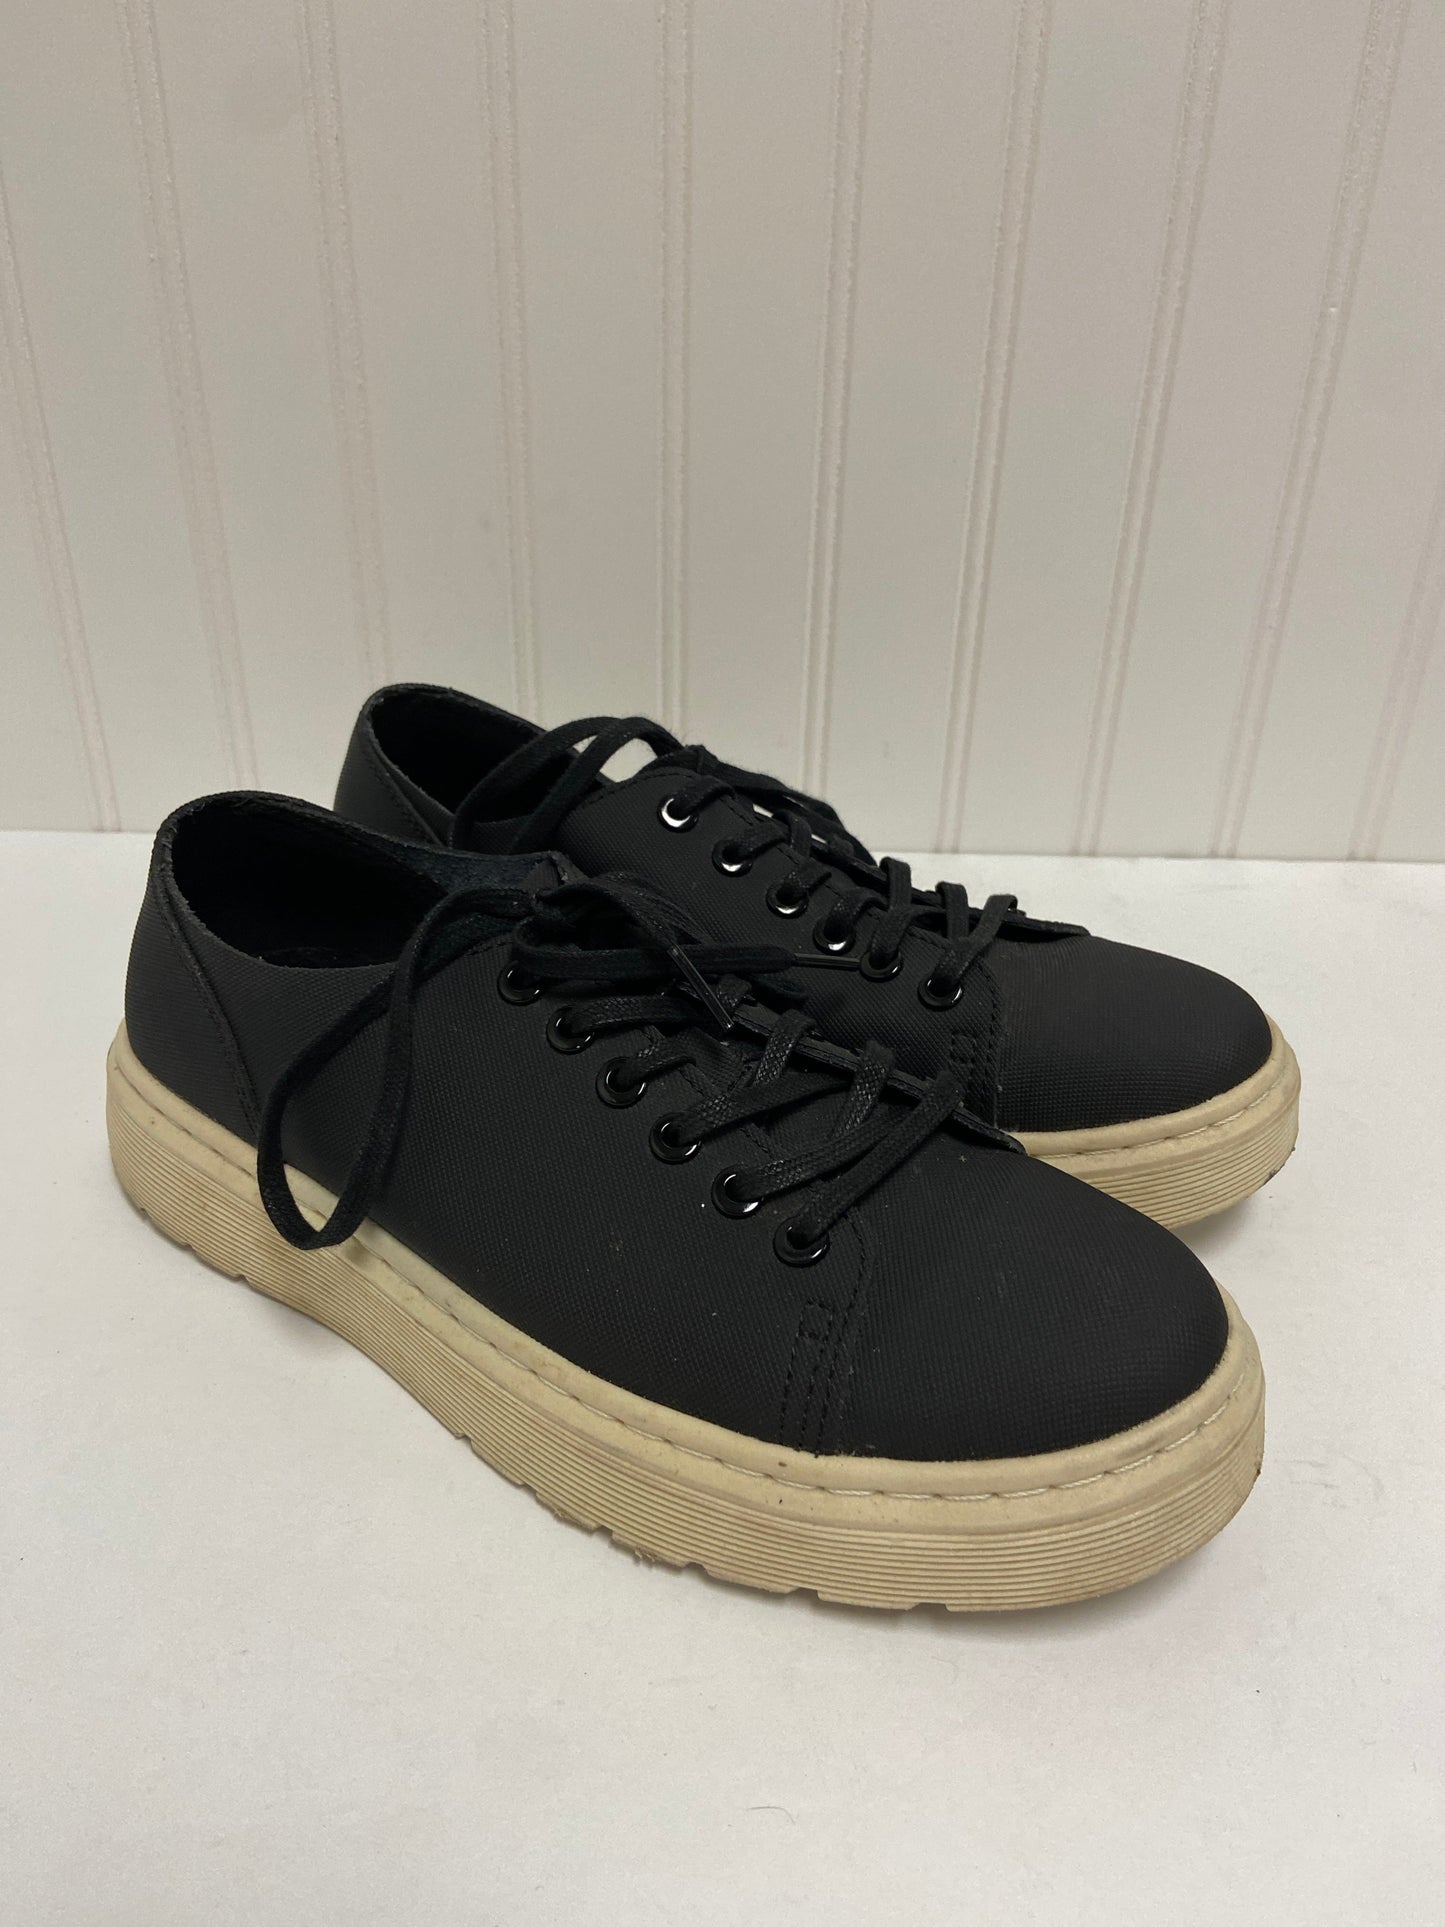 Black & Cream Shoes Sneakers Dr Martens, Size 7